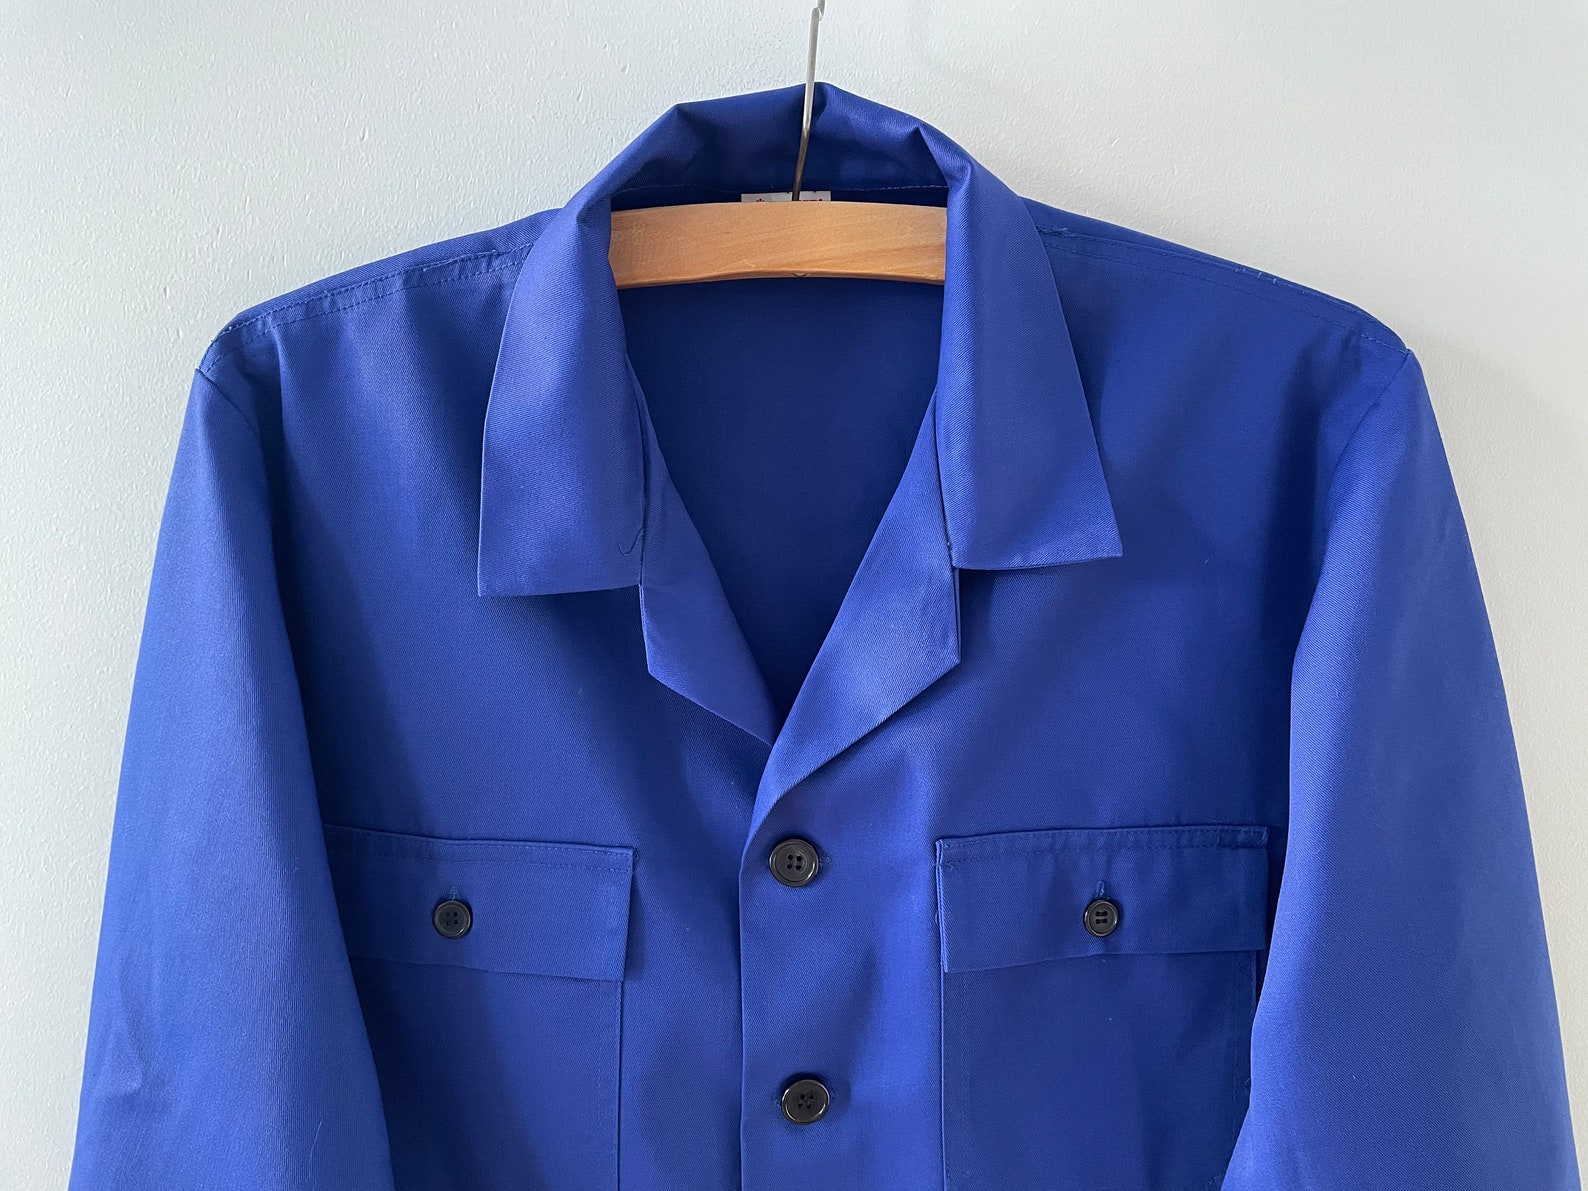 Navy blue work jacket workers jacket cotton blend workwear | Etsy